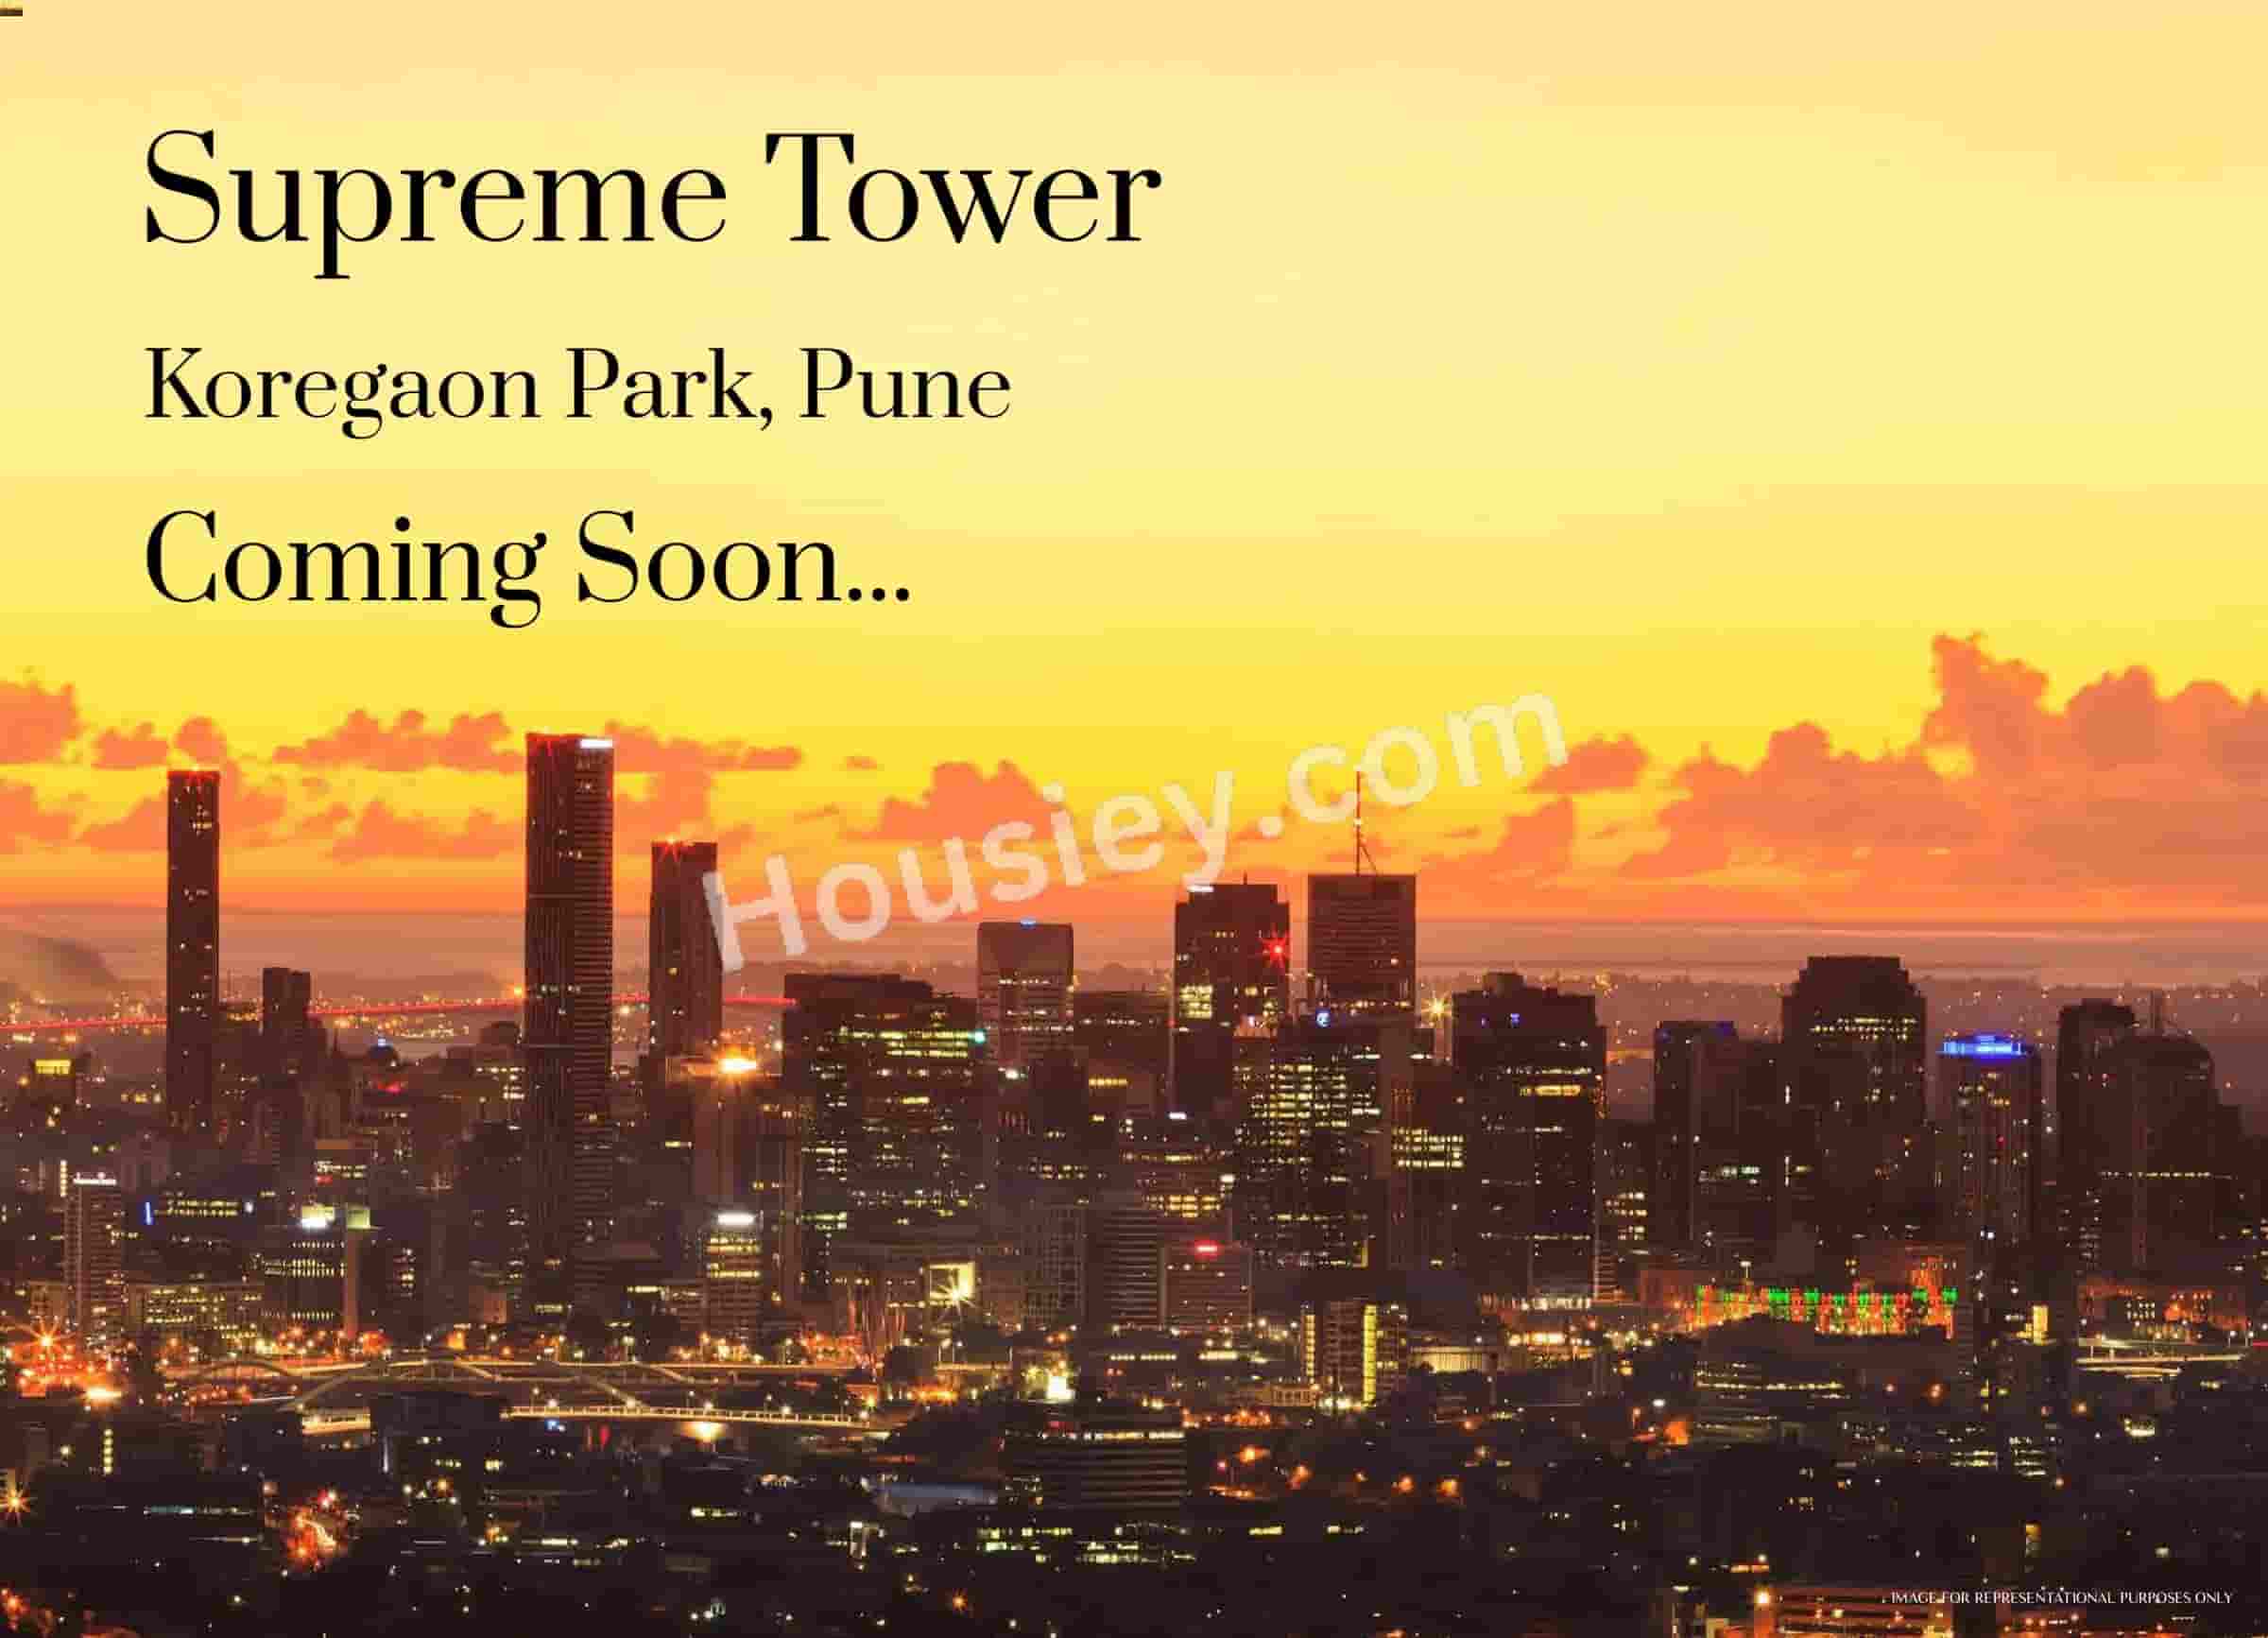 Supreme Tower Pune